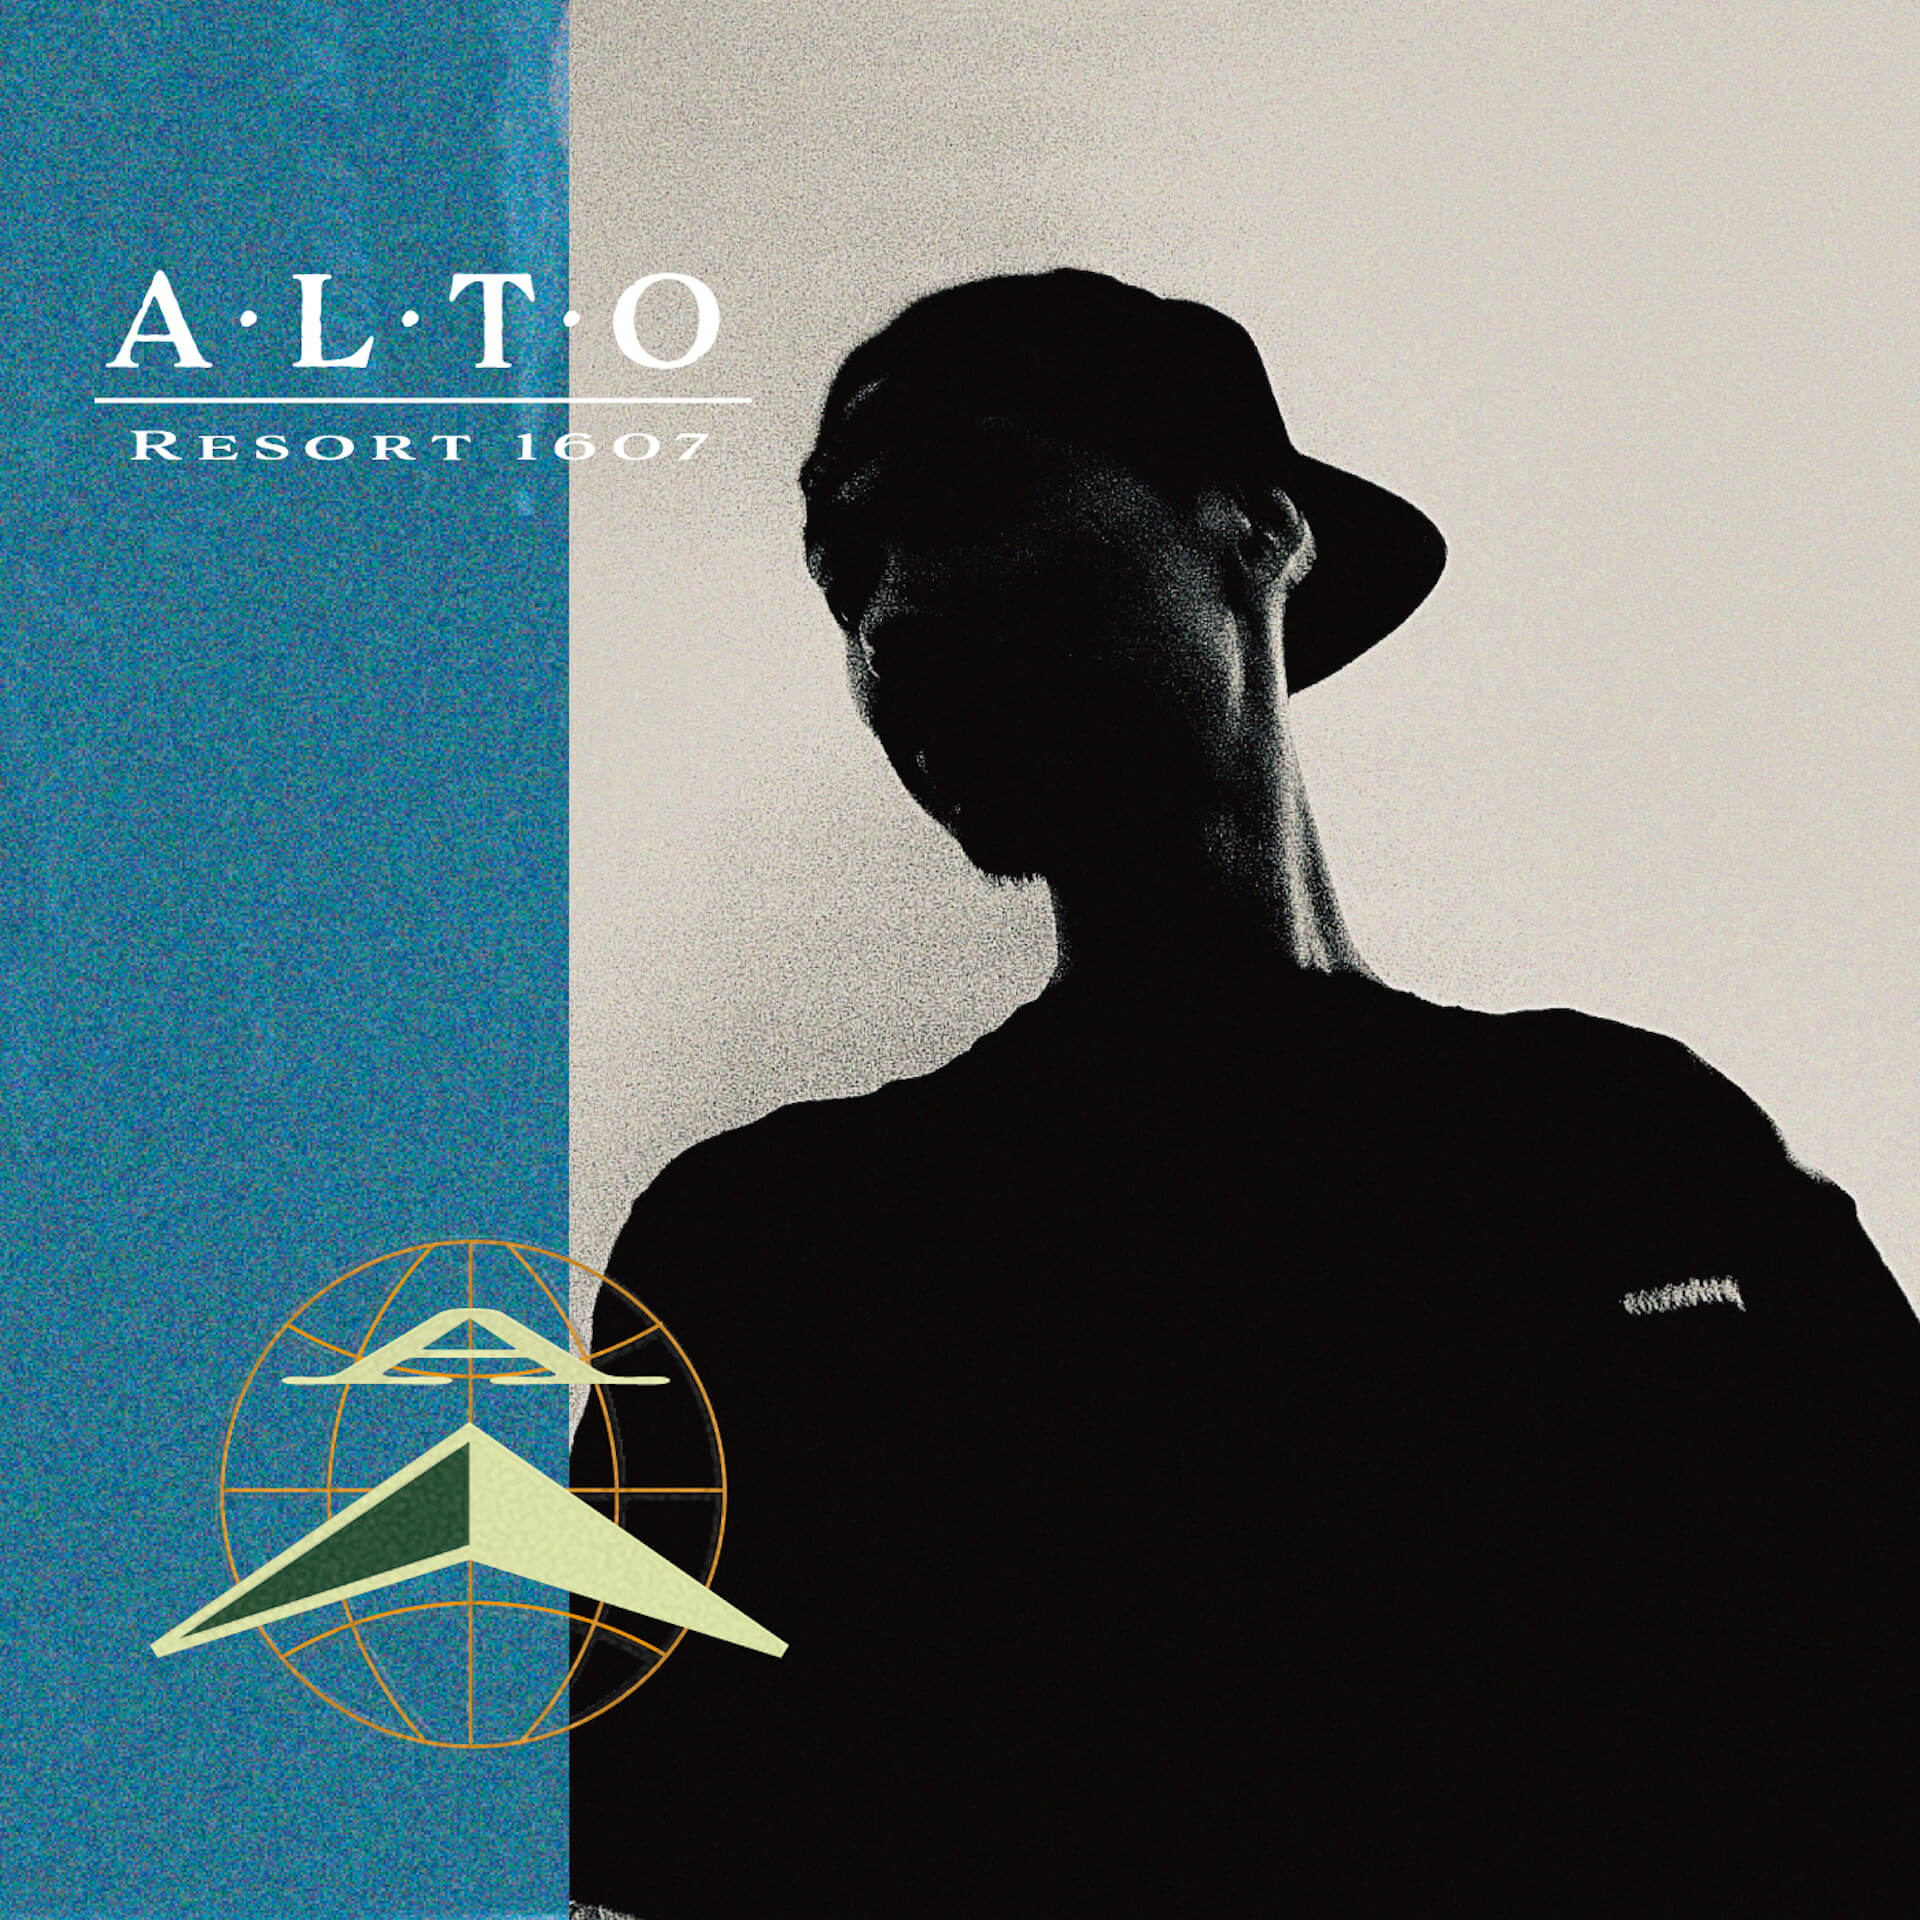 BazbeeStoop、LSBOYZらの作品参加で知られるAltoの最新ビートテープ『Resort 1607』が発表｜リリースはtajima hal主宰〈Hermit City Recordings〉から music211231-alto-resort-1607-2